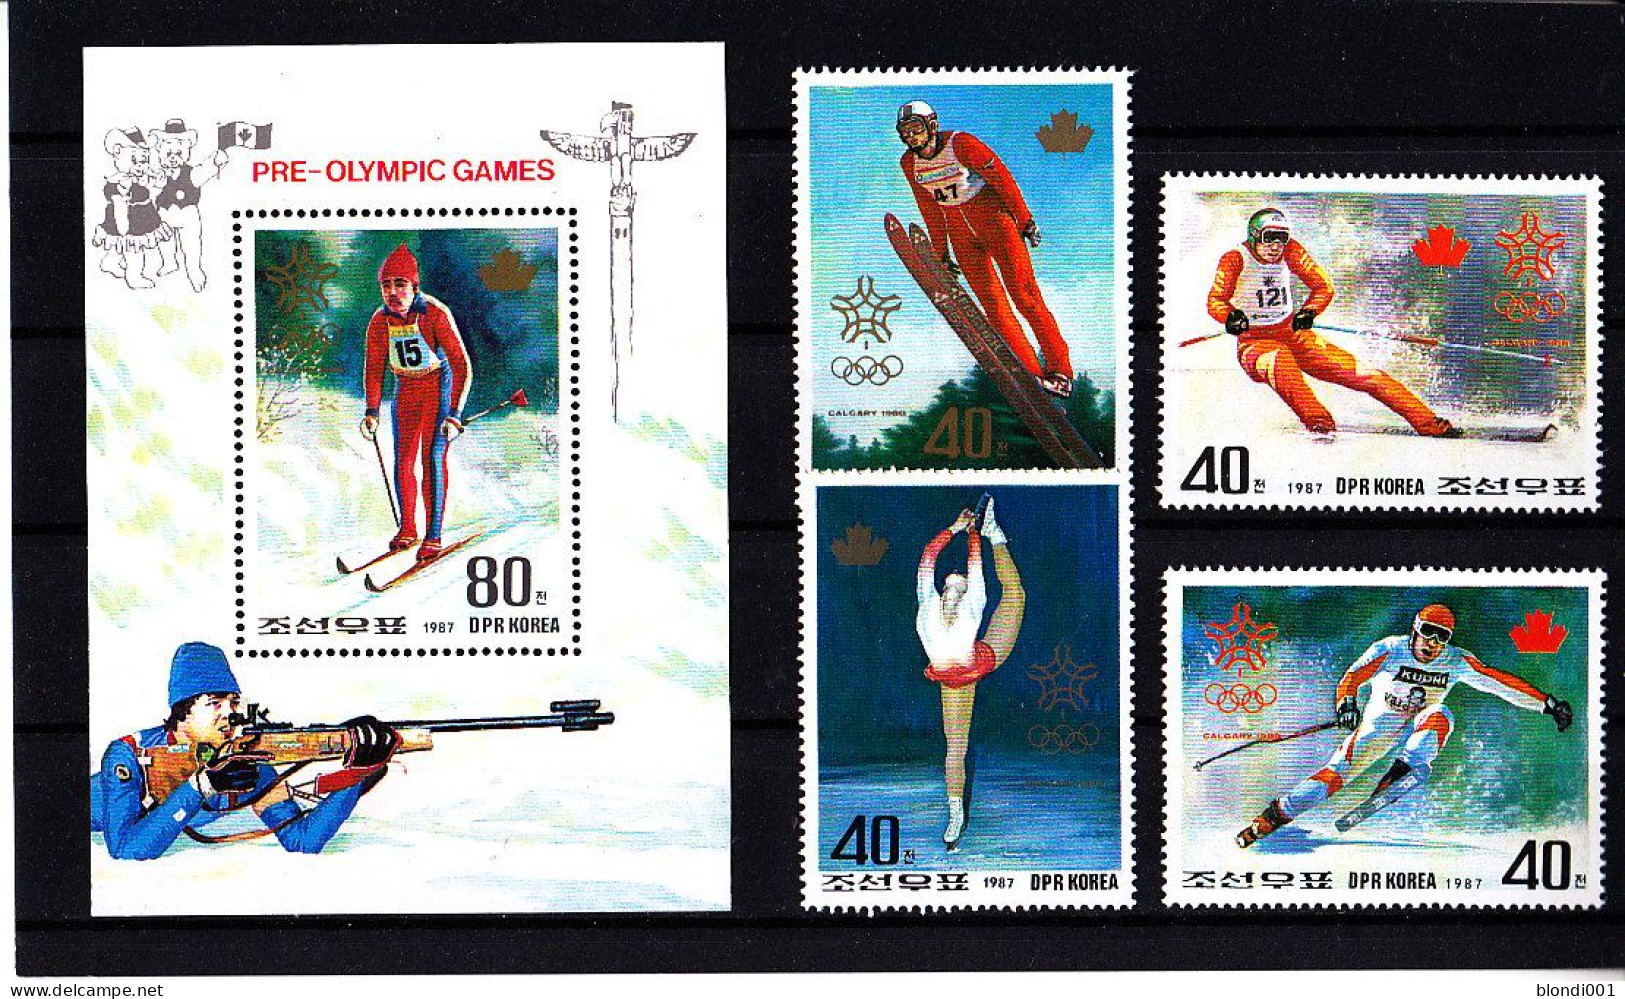 Olympics 1988 - Figure Skate - KOREA - S/S+Set MNH - Invierno 1988: Calgary